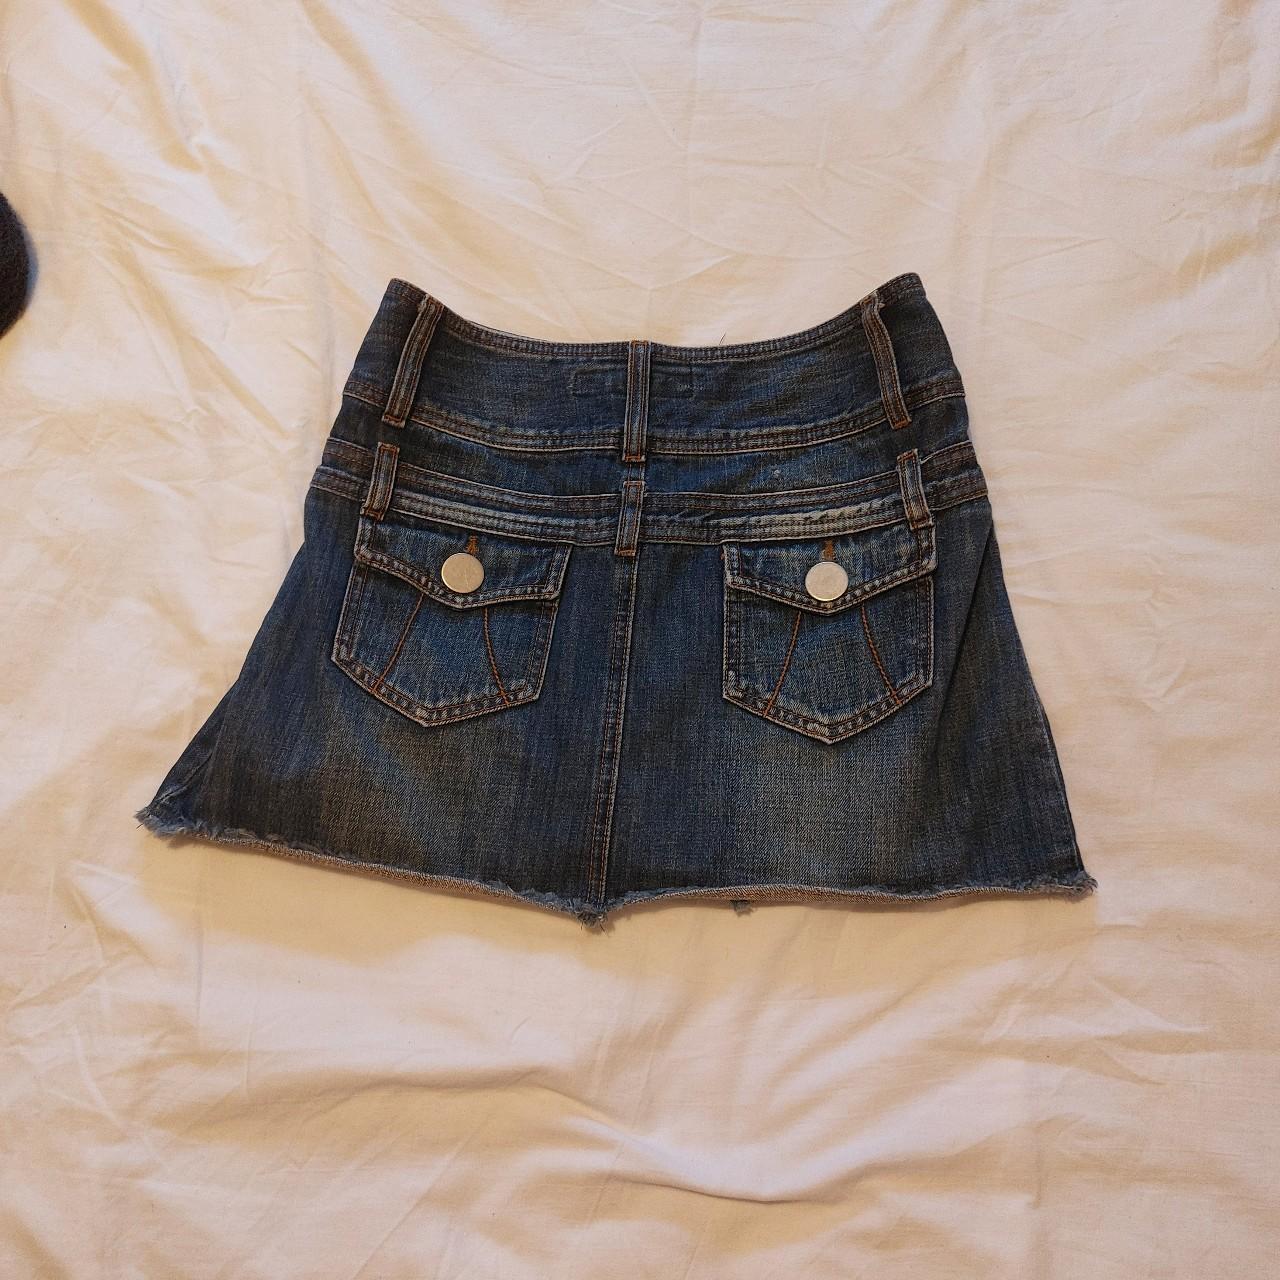 Vintage Y2K denim ruffle mini skirt 28-30 inch... - Depop